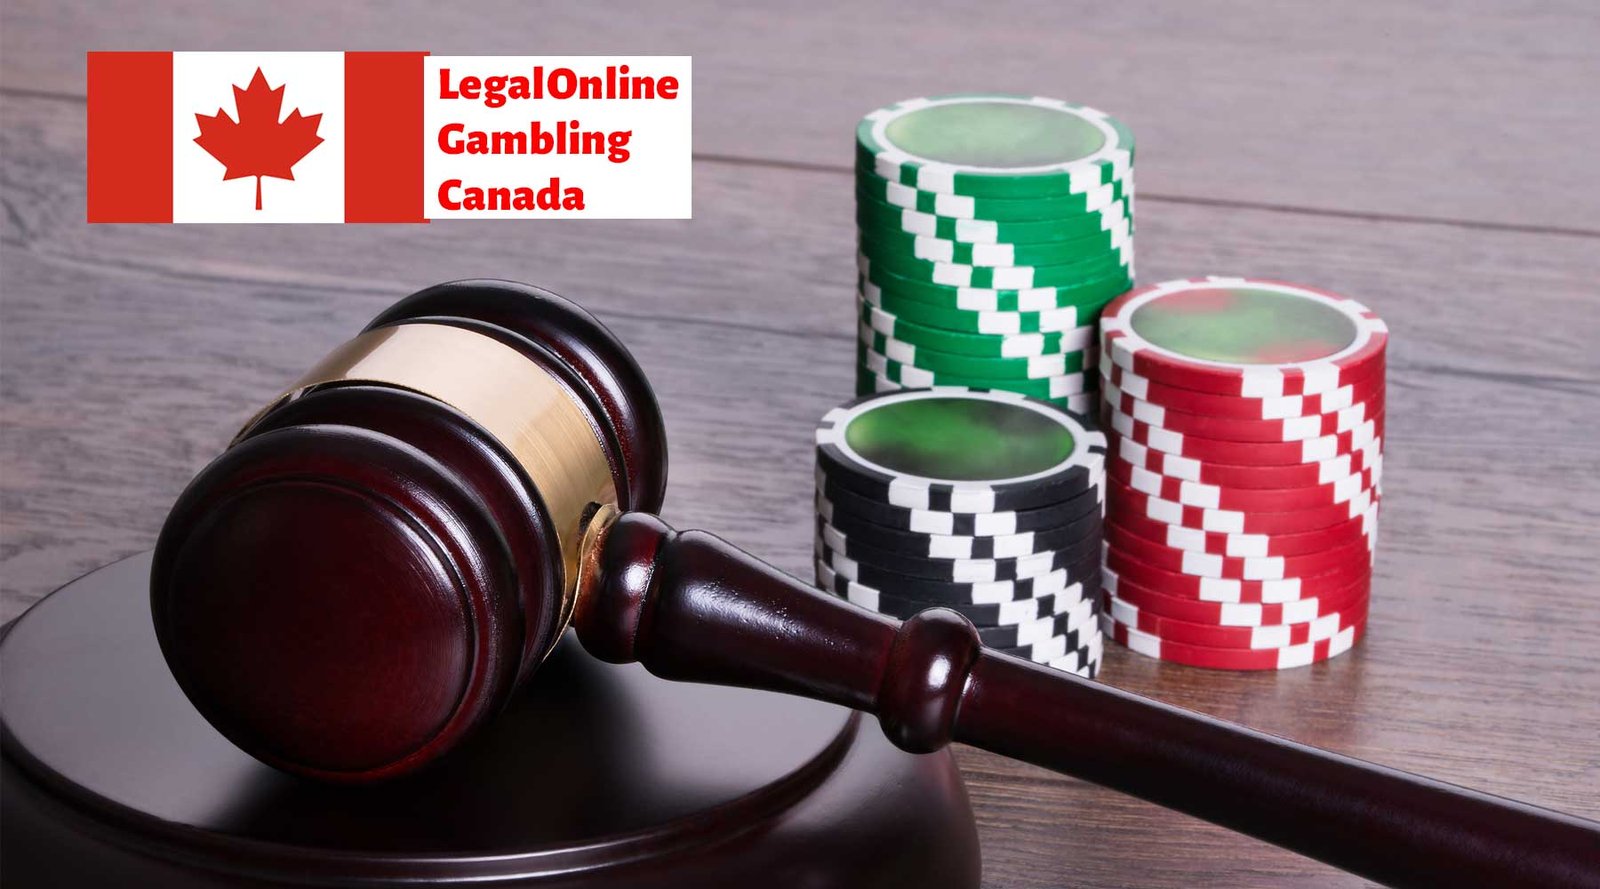 Legal Online Gambling Canada